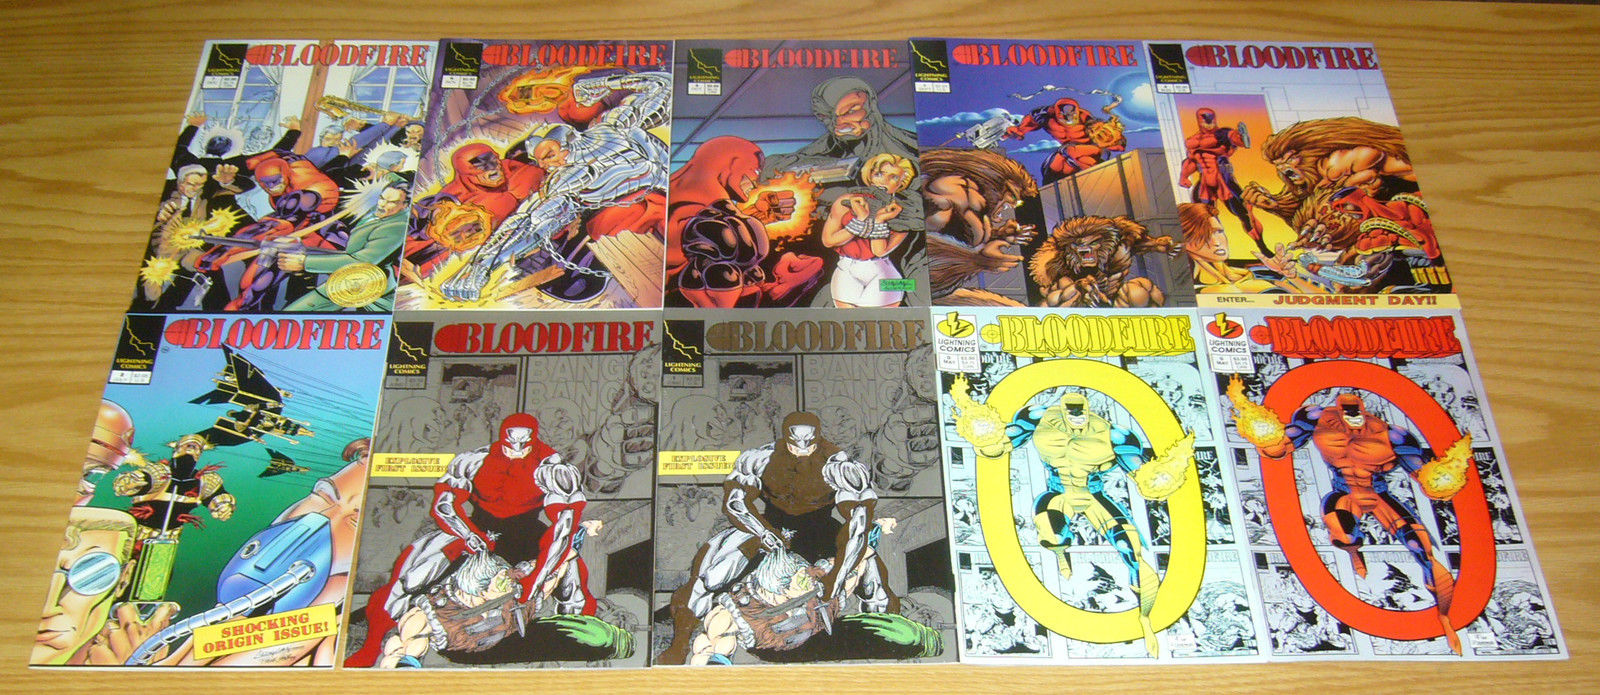 1993 LIGHTNING Comics BLOODFIRE #1 ~ VF/NM Comic Book 